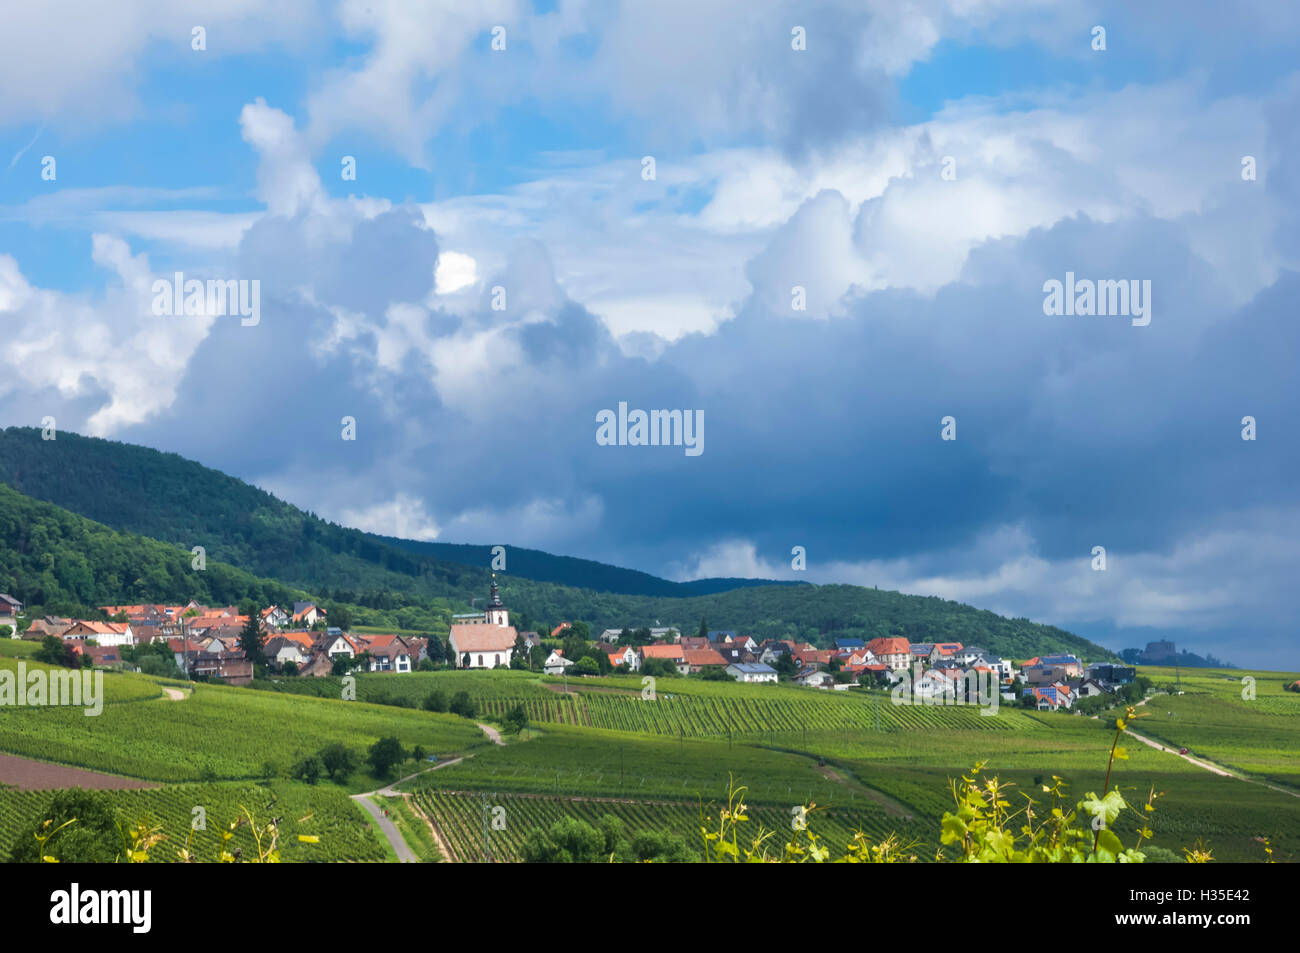 Village amongst vineyards in the Pfalz area, Germany Stock Photo